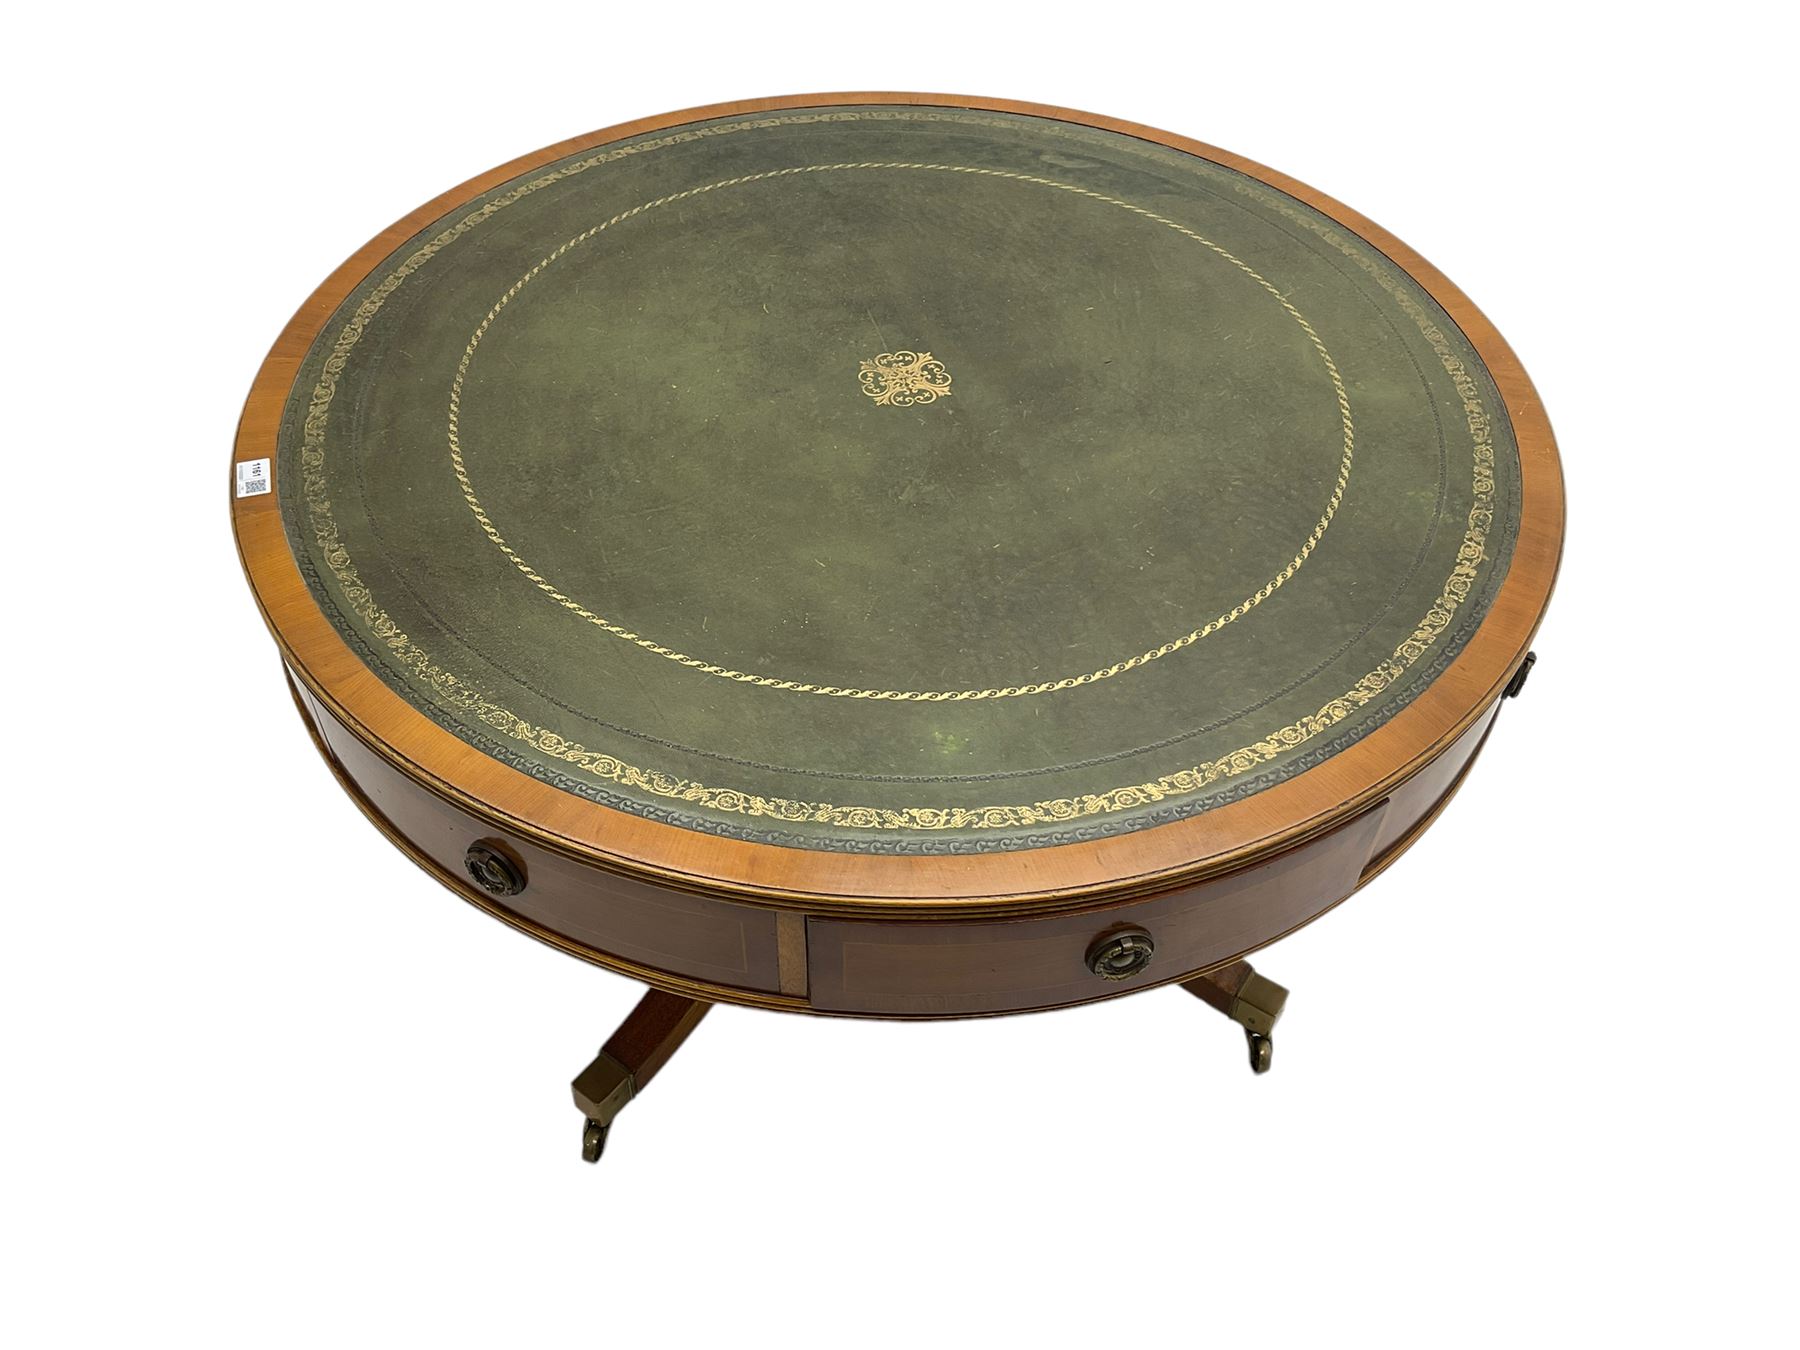 Georgian style yew wood drum table - Image 2 of 4